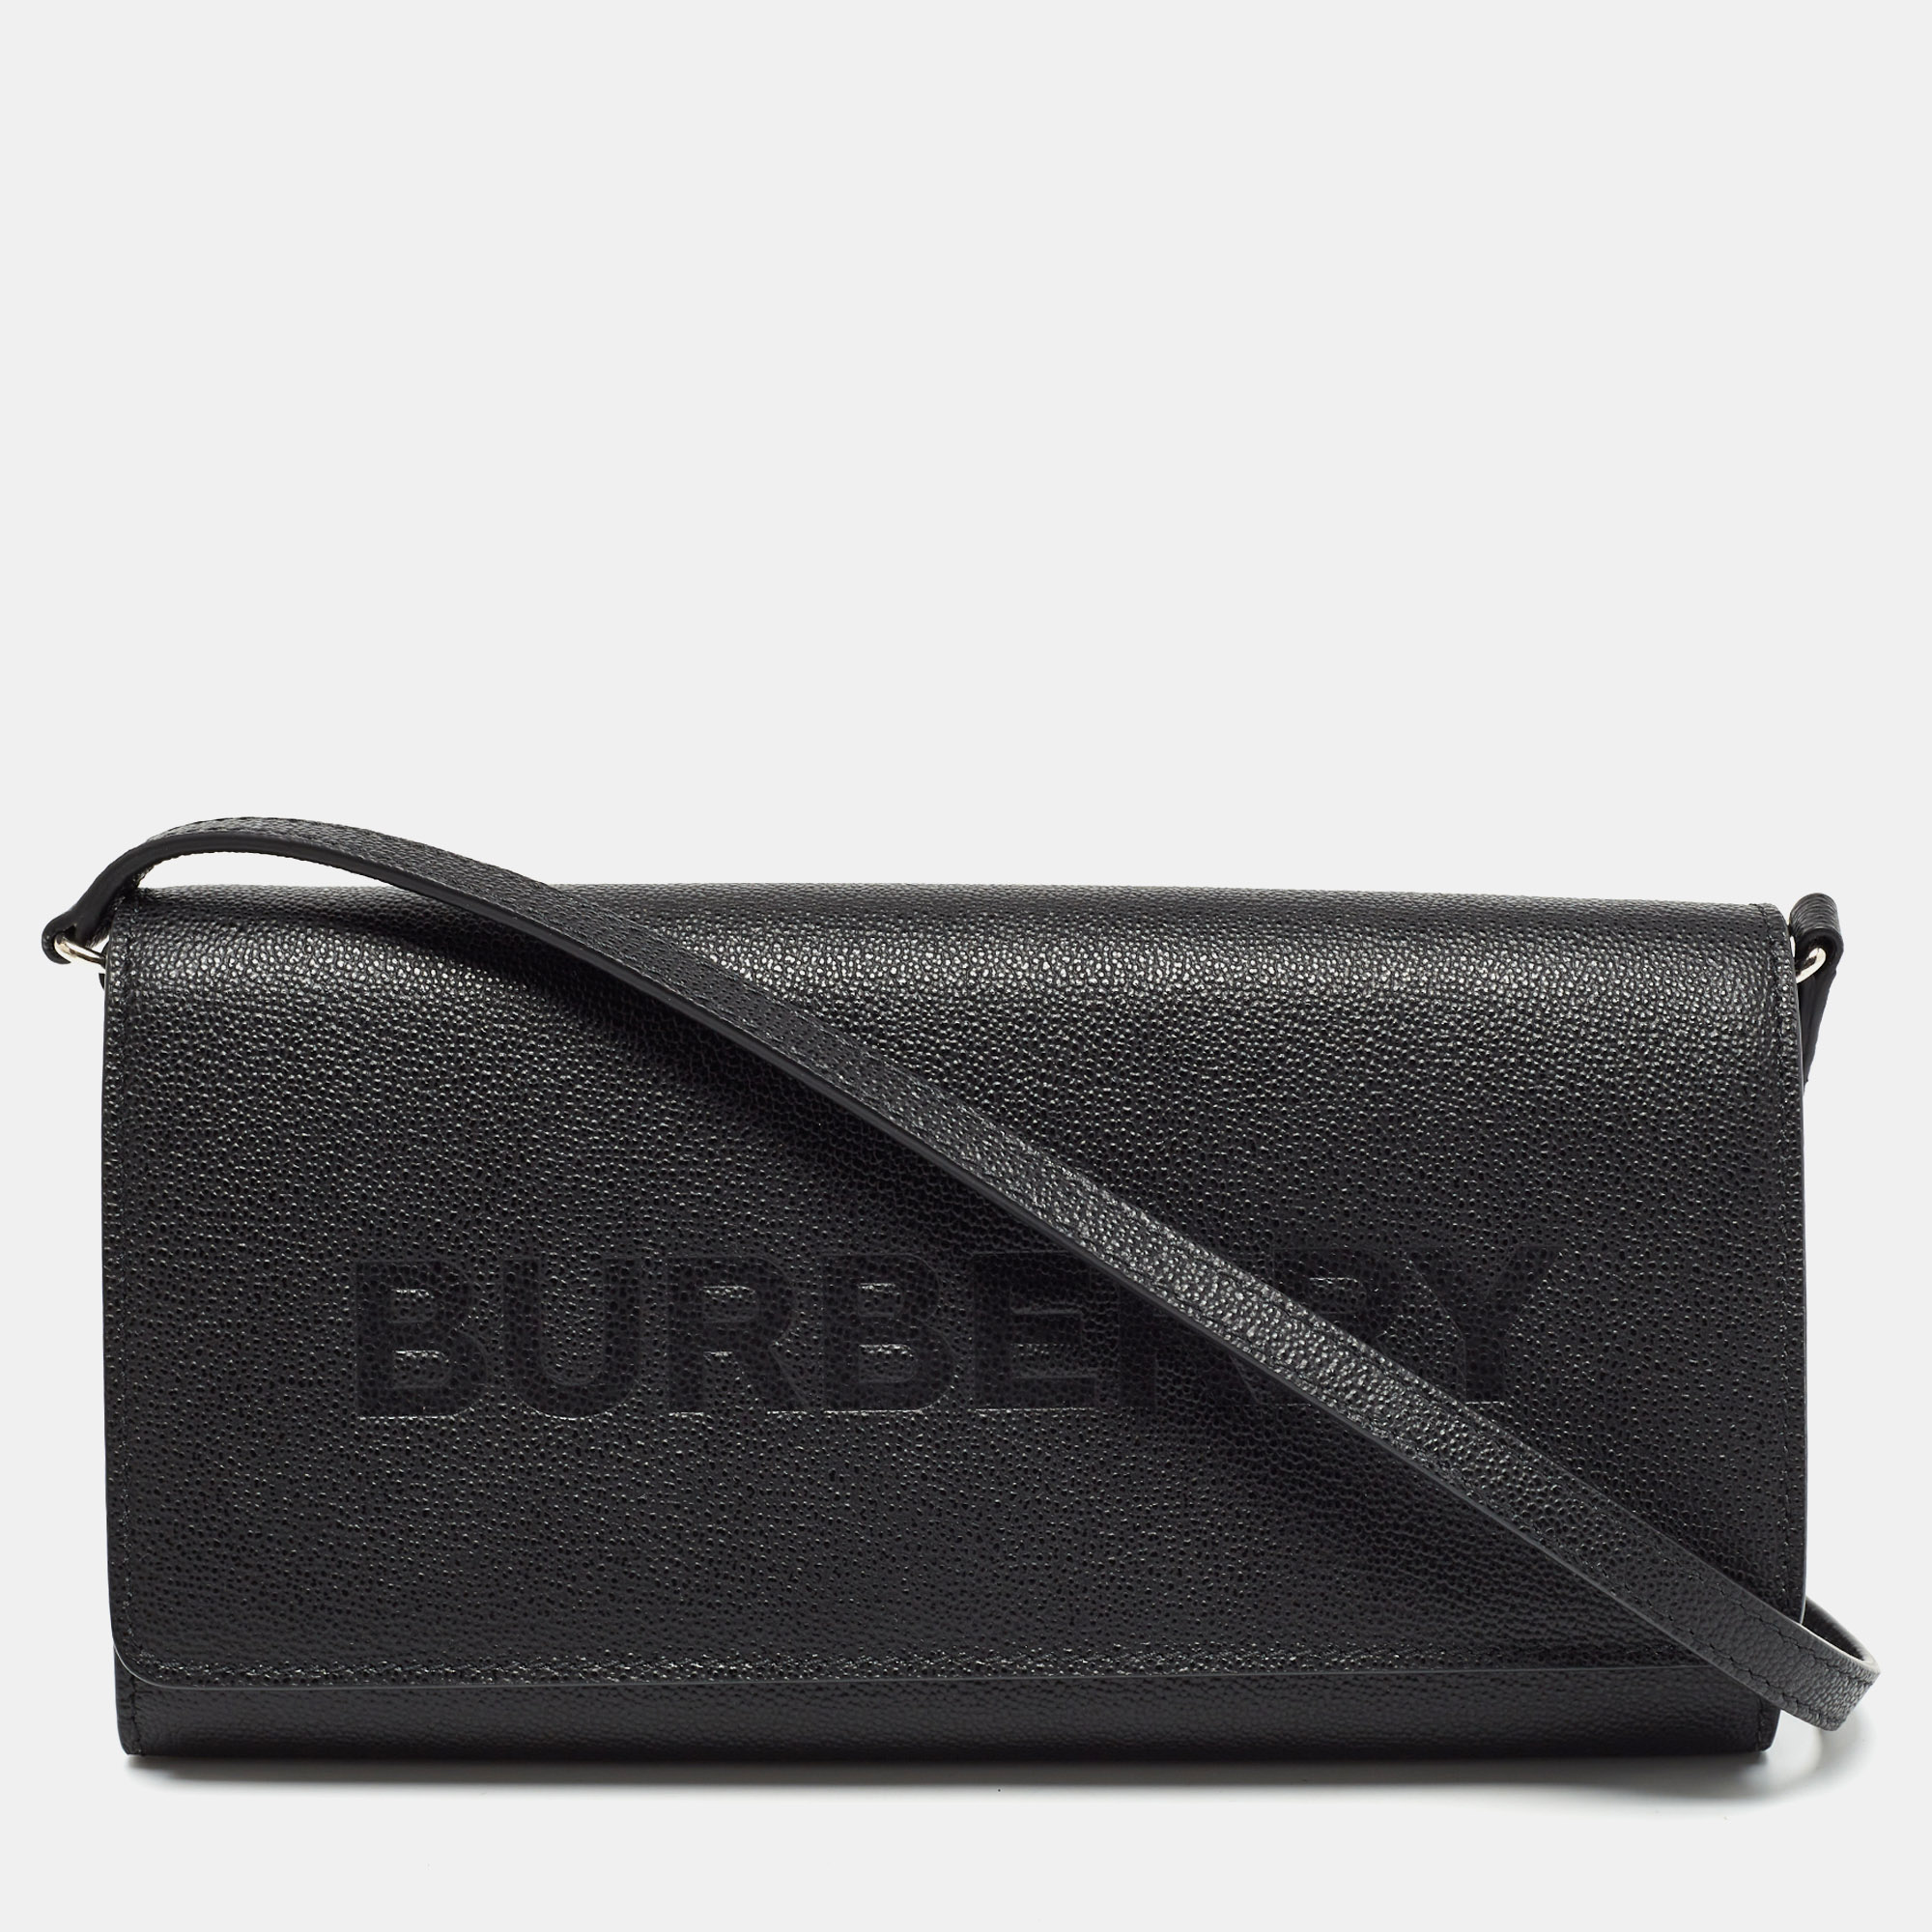 Burberry Black Leather Henley Crossbody Bag